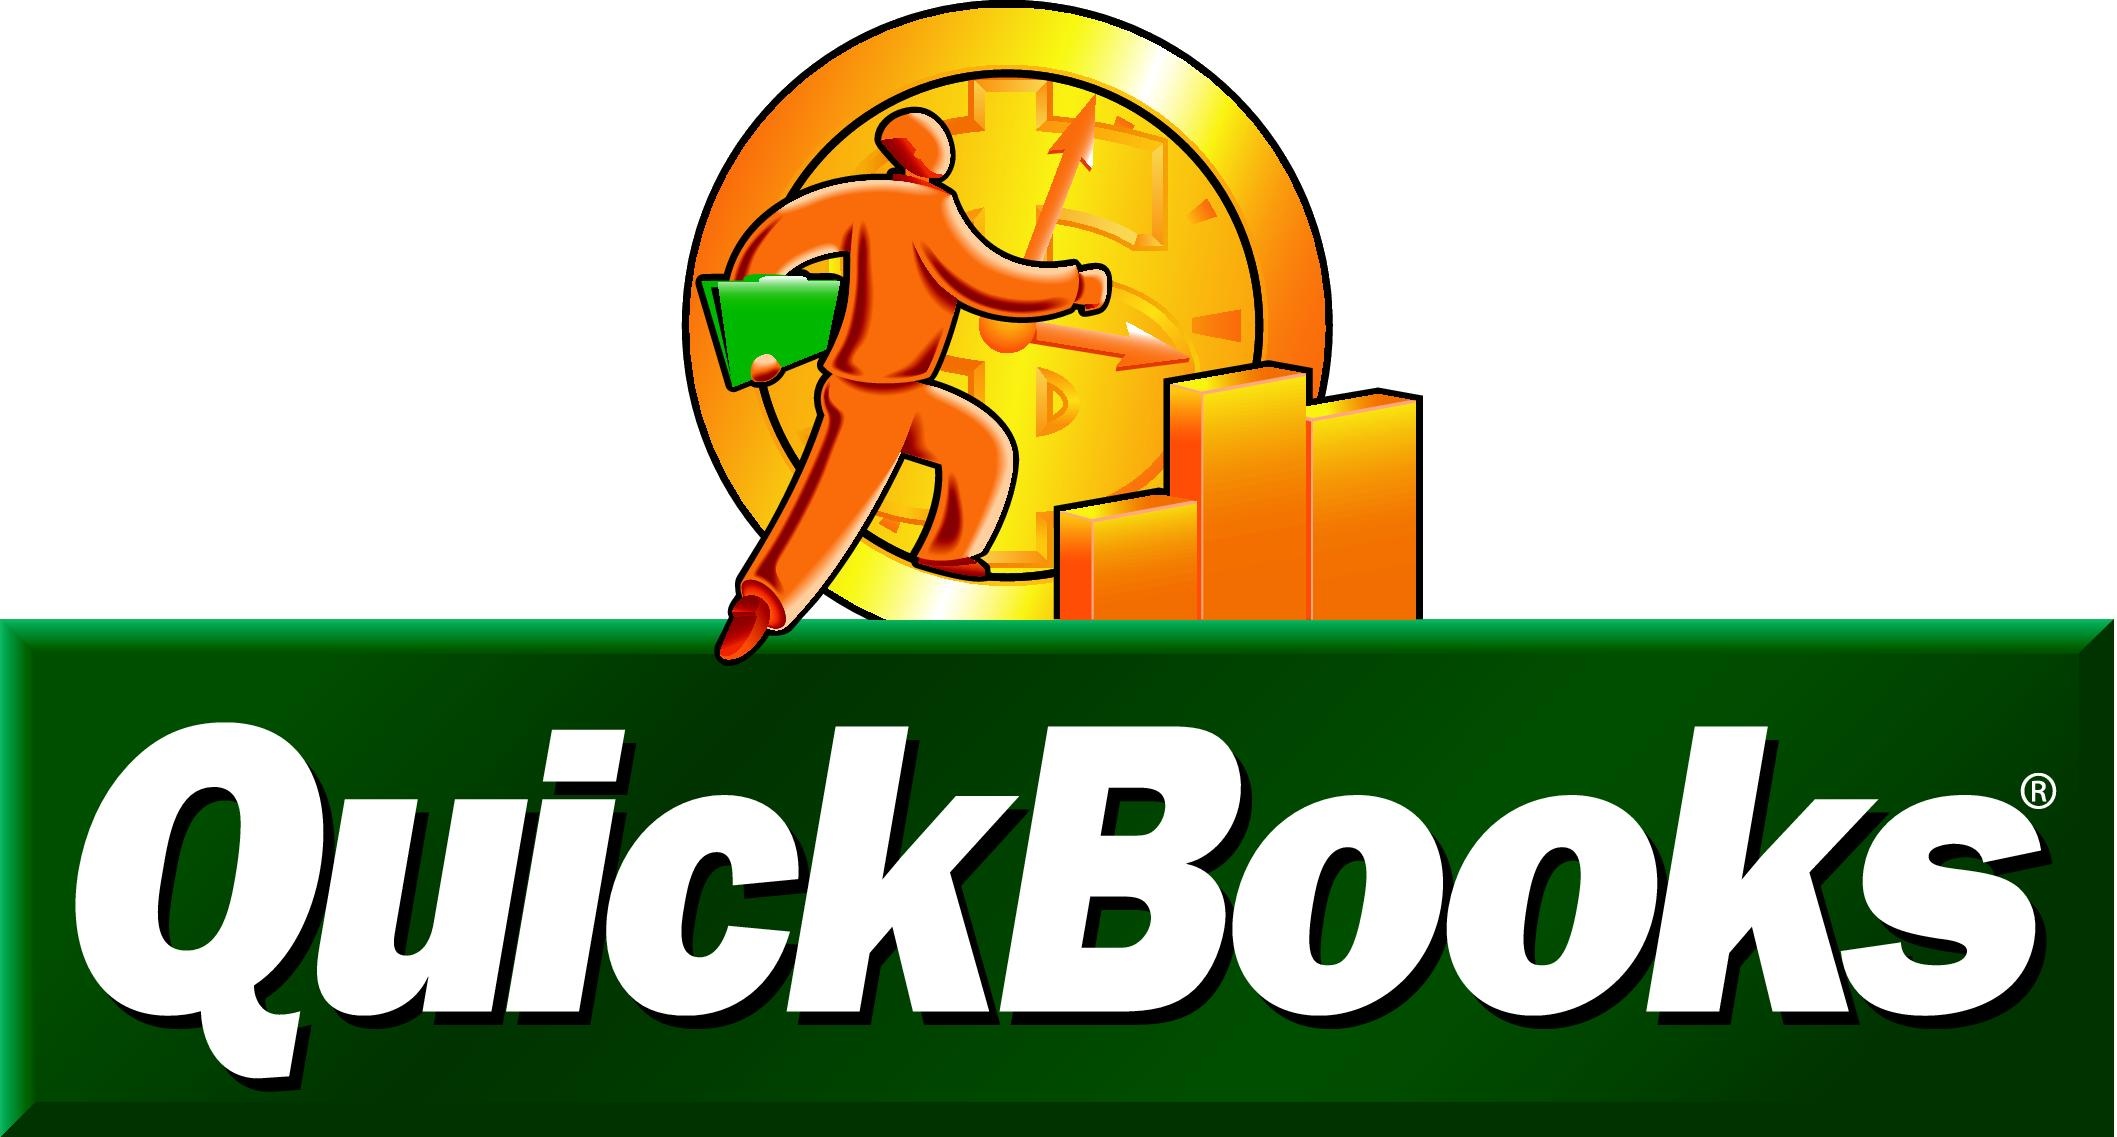 QuickBooks DESKTOP > Setting Up a Company and Basics (WEBINAR) Tickets